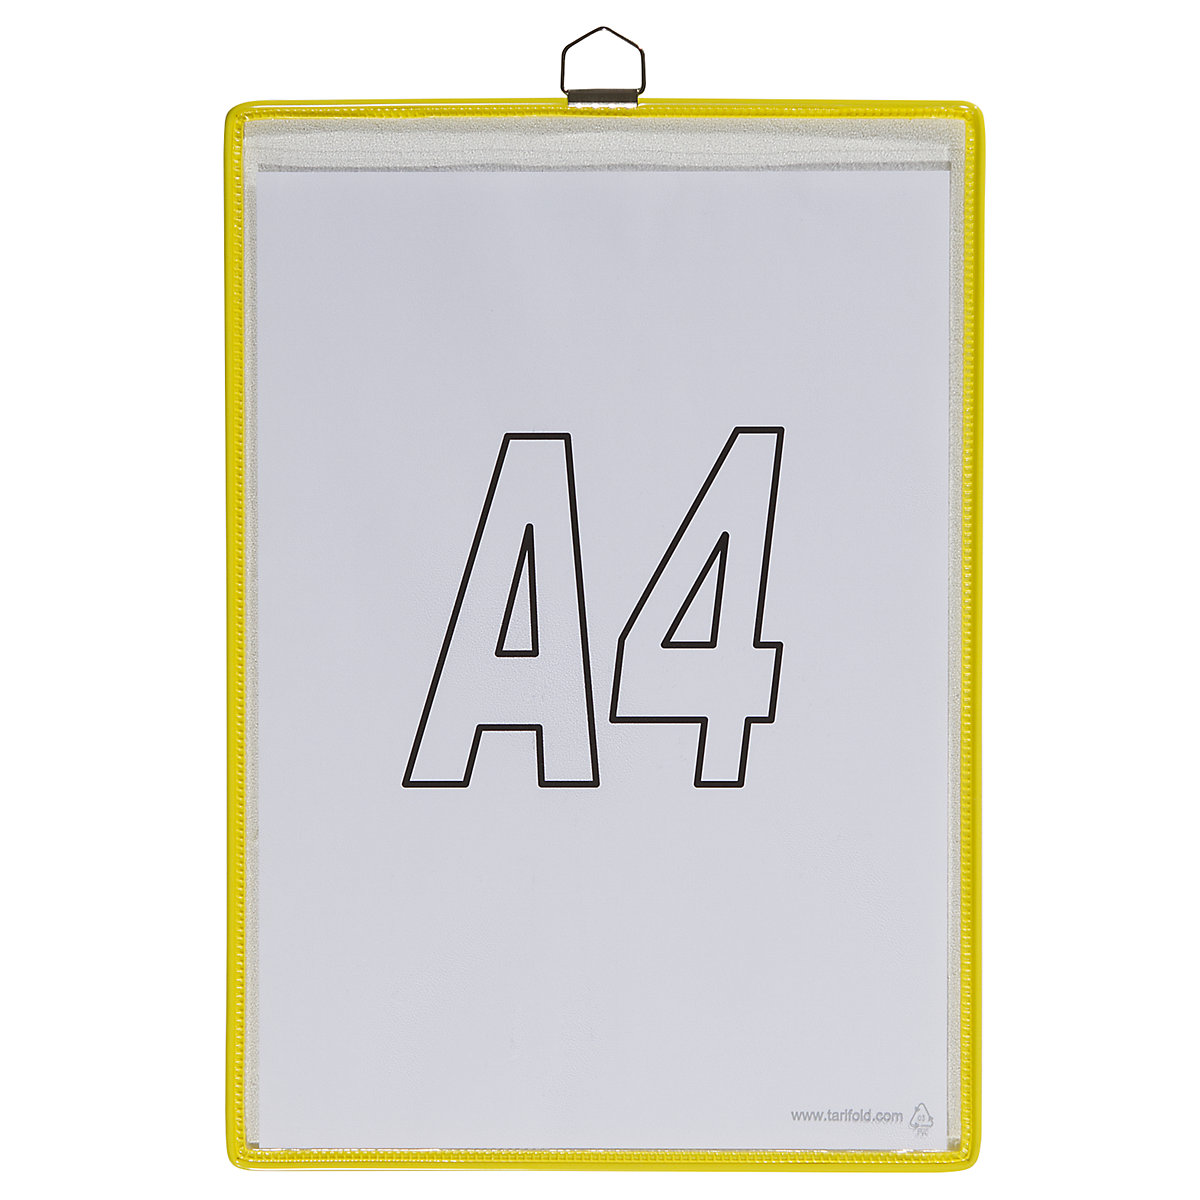 Bolsa transparente colgante – Tarifold, para formato DIN A4, amarillo, UE 10 unidades-7